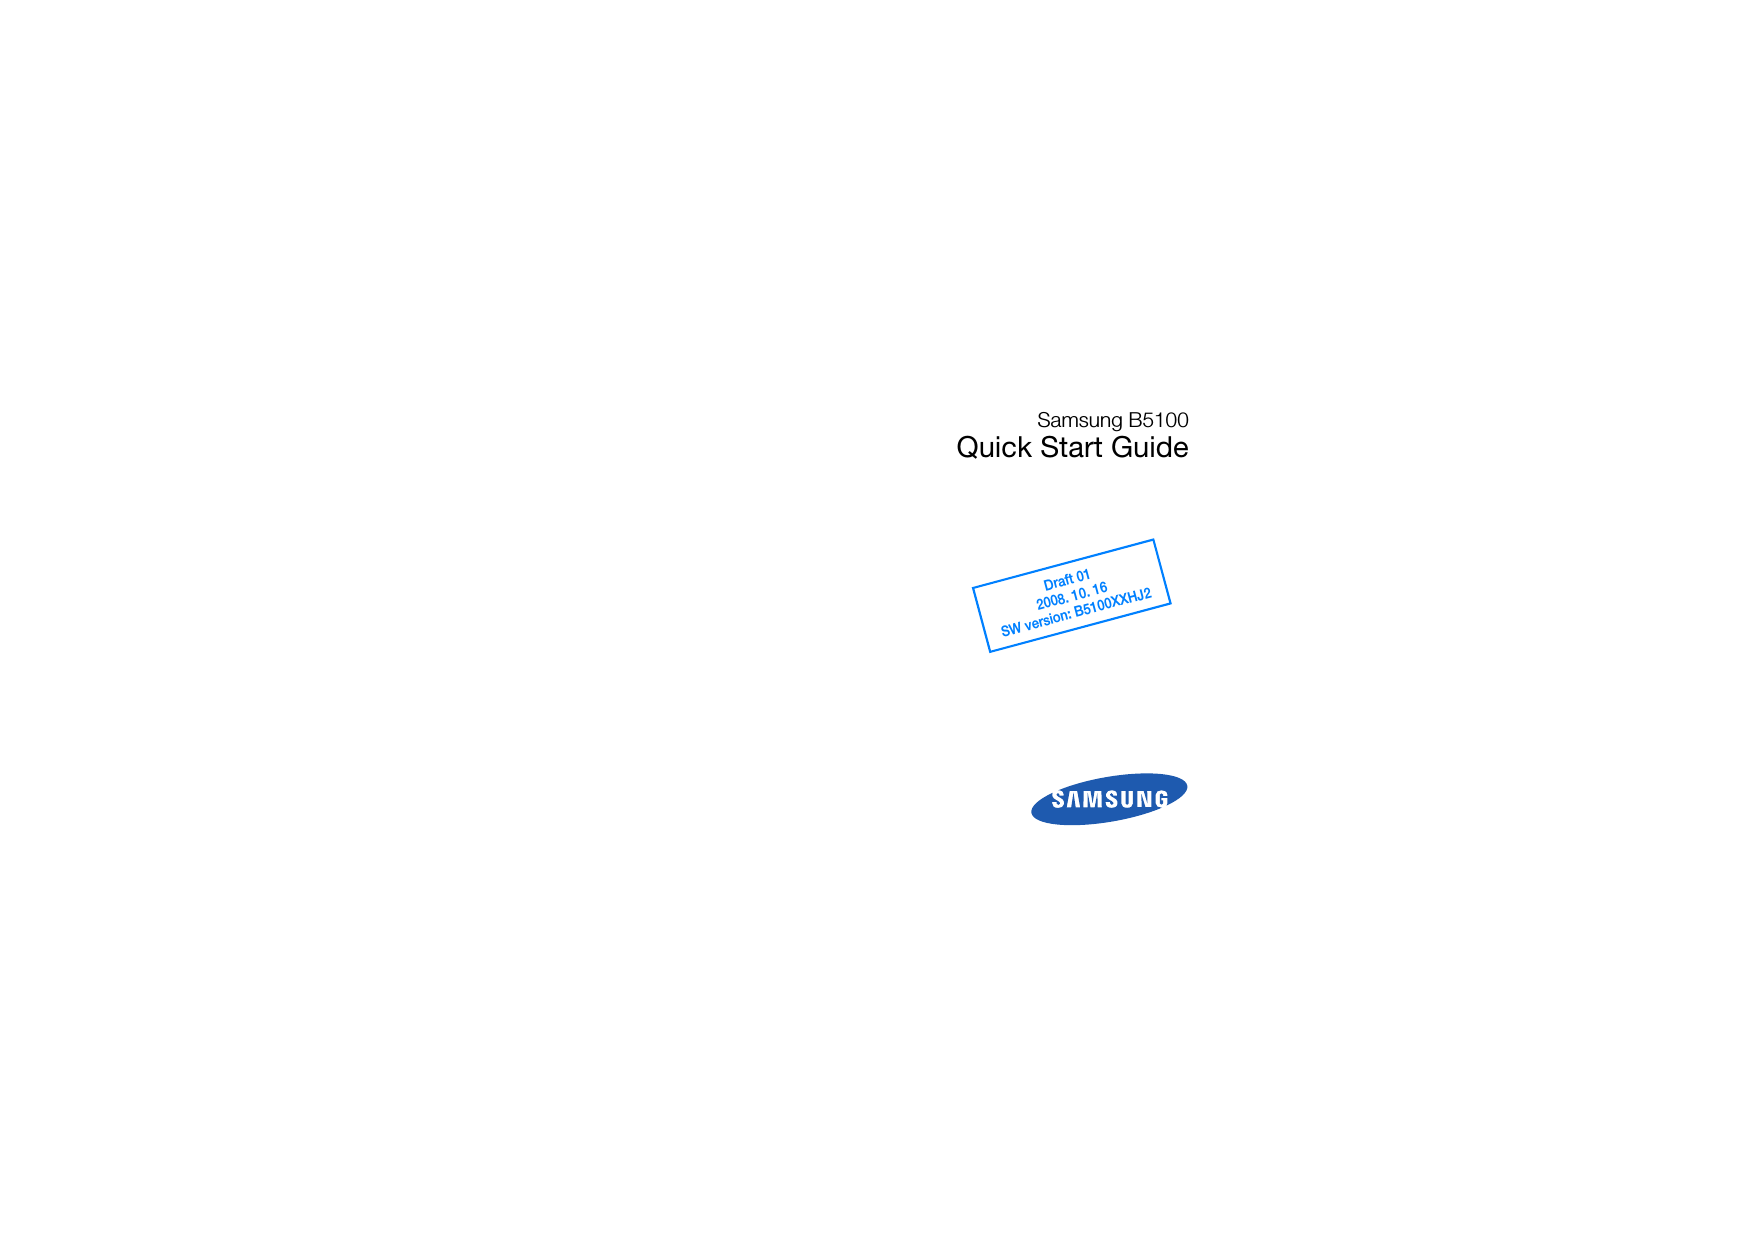 Samsung B5100Quick Start GuideDraft 012008. 10. 16SW version: B5100XXHJ2